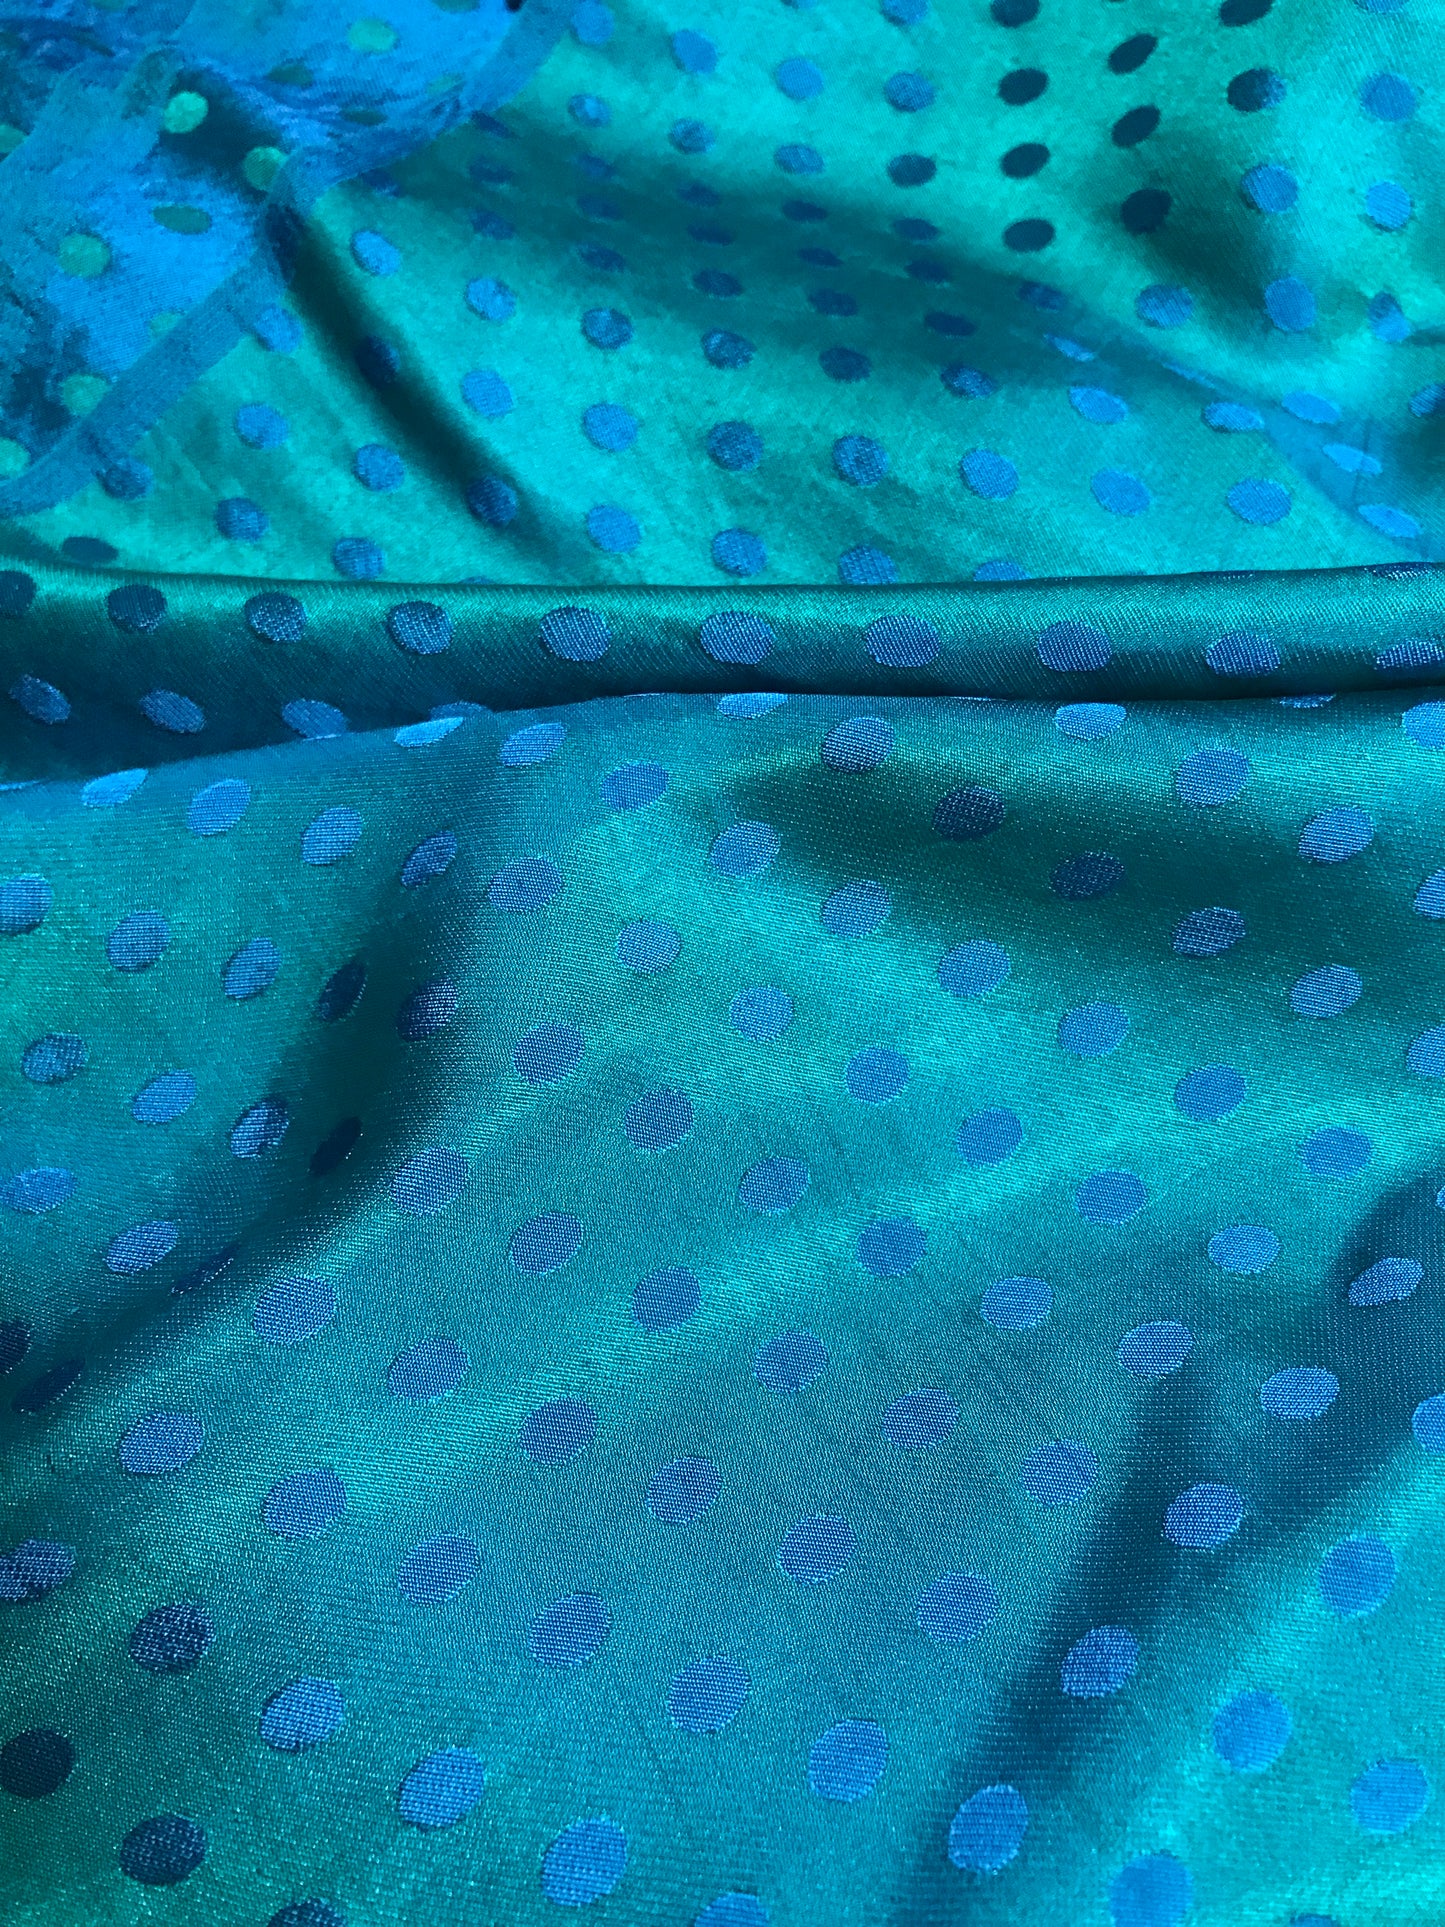 Peacock dot silk - PURE MULBERRY SILK fabric by the yard - Polkadot silk -Luxury Silk - Natural silk - Handmade in VietNam- Silk with Design